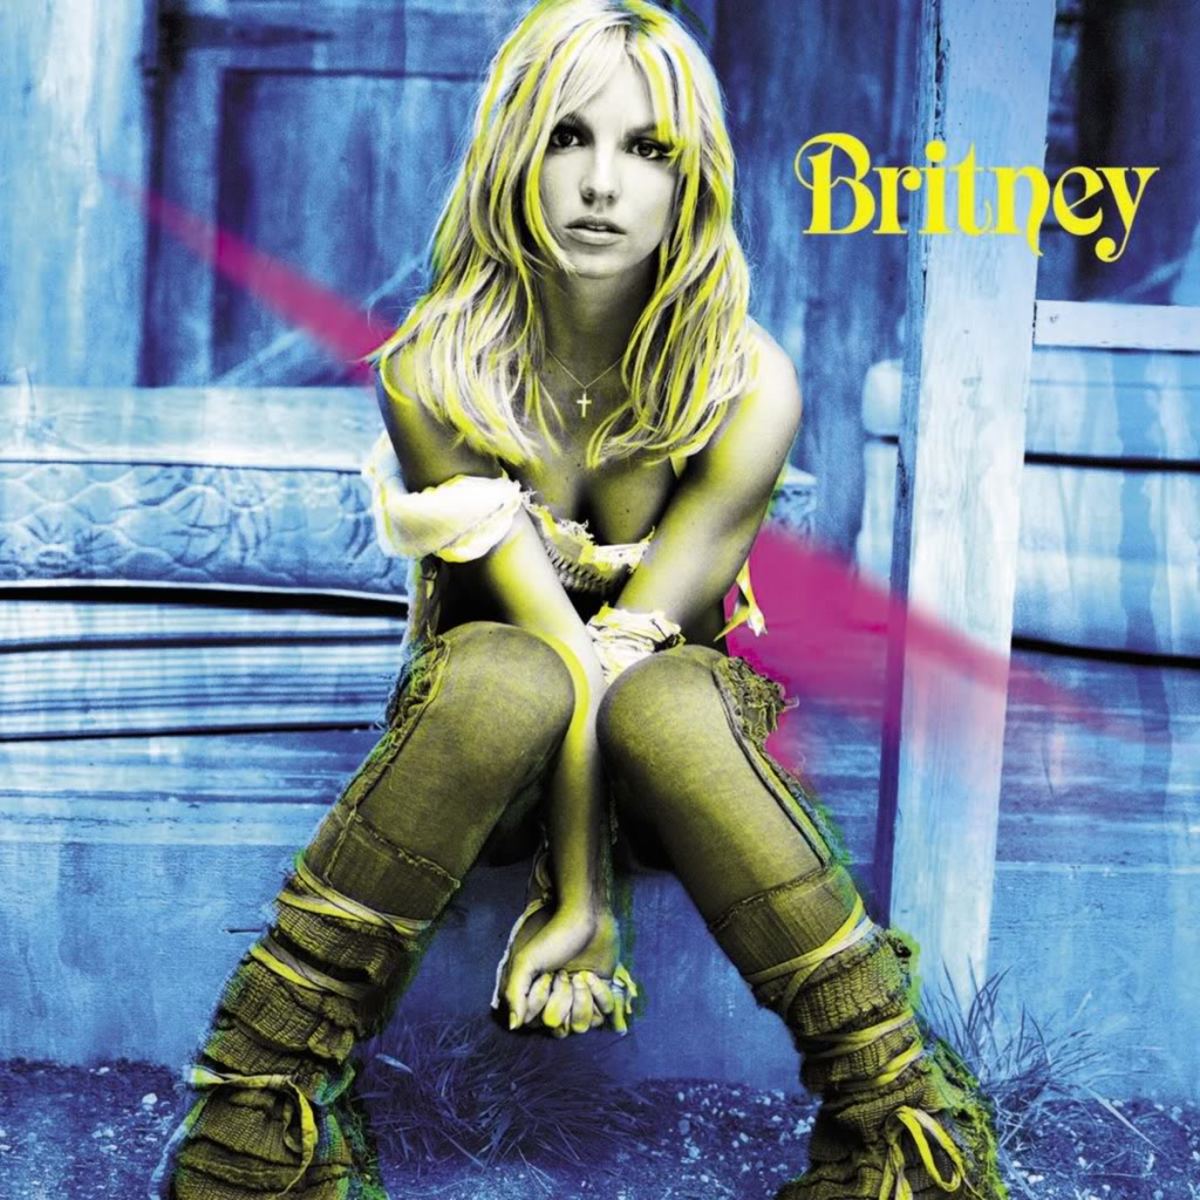 Britney Spears, "Britney" (2001)